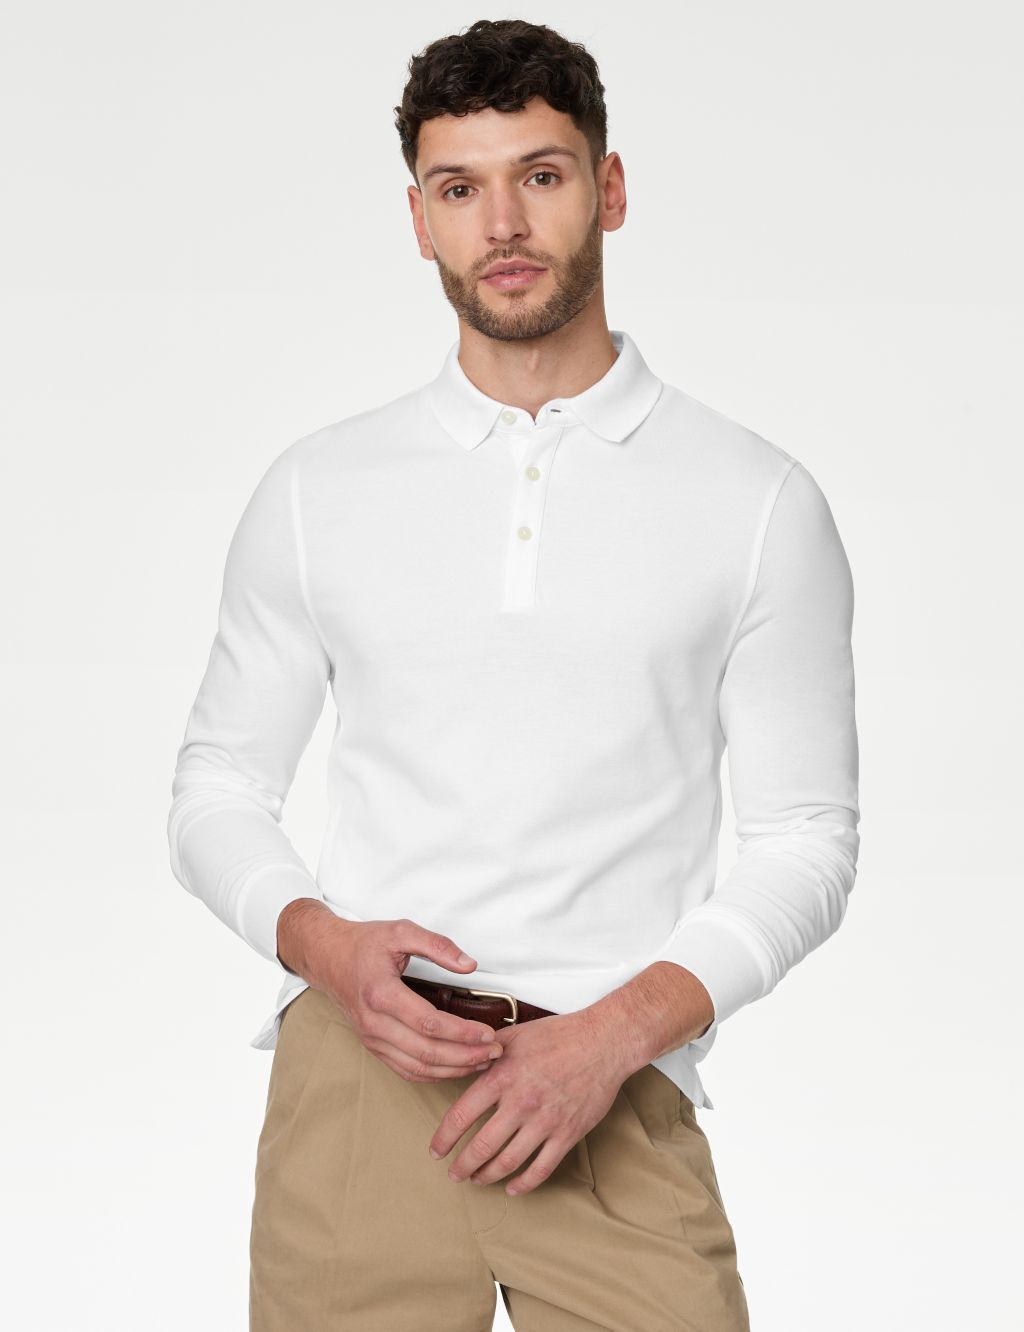 Men’s White Polo Shirts | M&S